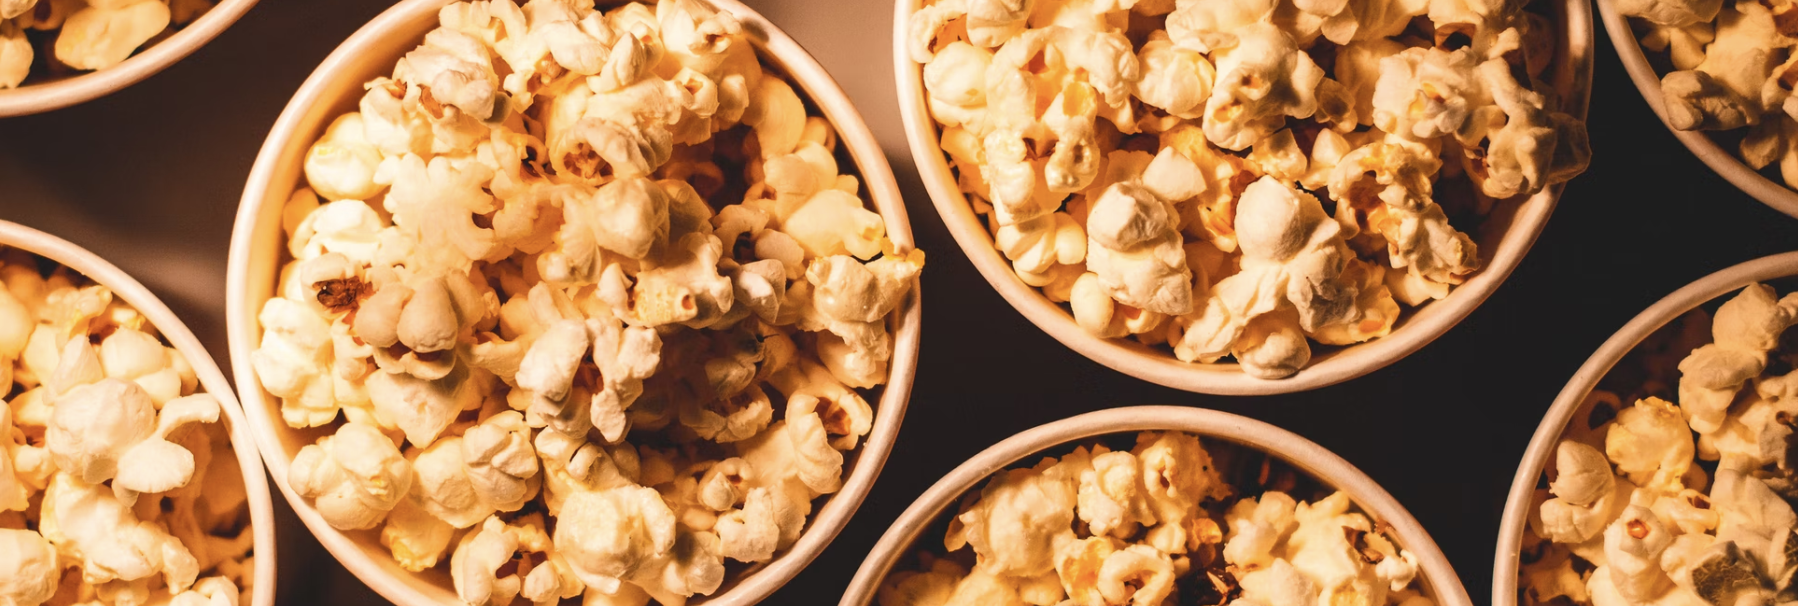 streaming vidéo : popcorn